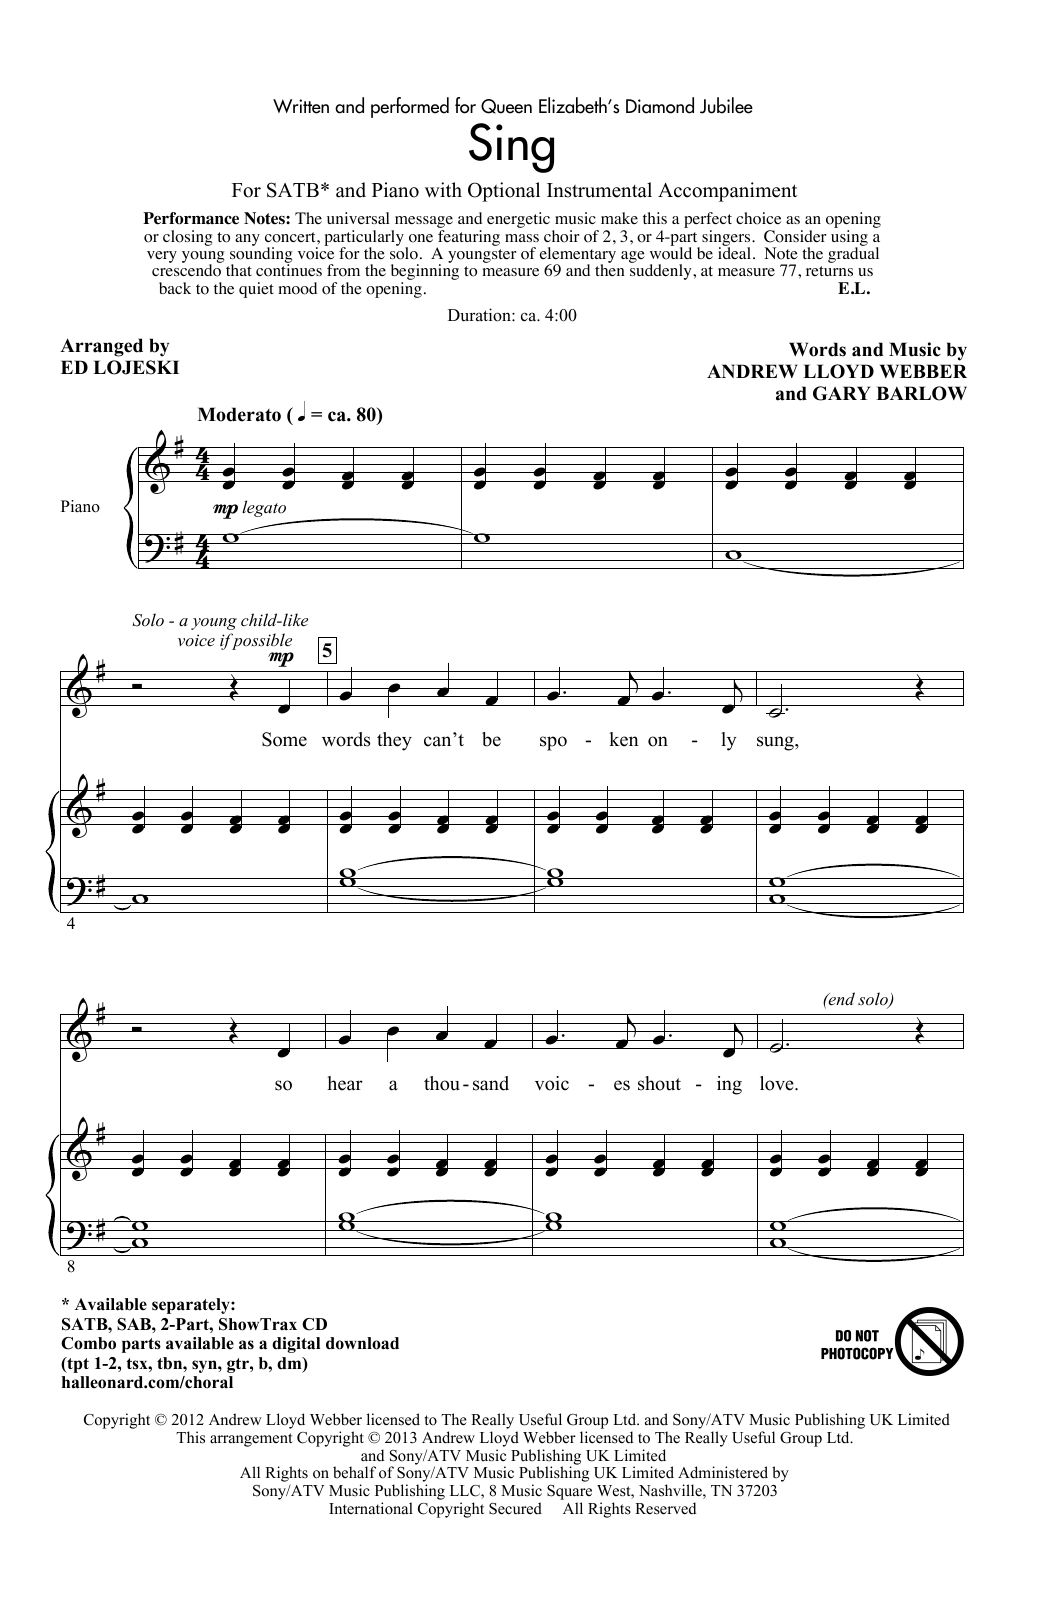 Andrew Lloyd Webber & Gary Barlow Sing (arr. Ed Lojeski) Sheet Music Notes & Chords for SATB Choir - Download or Print PDF